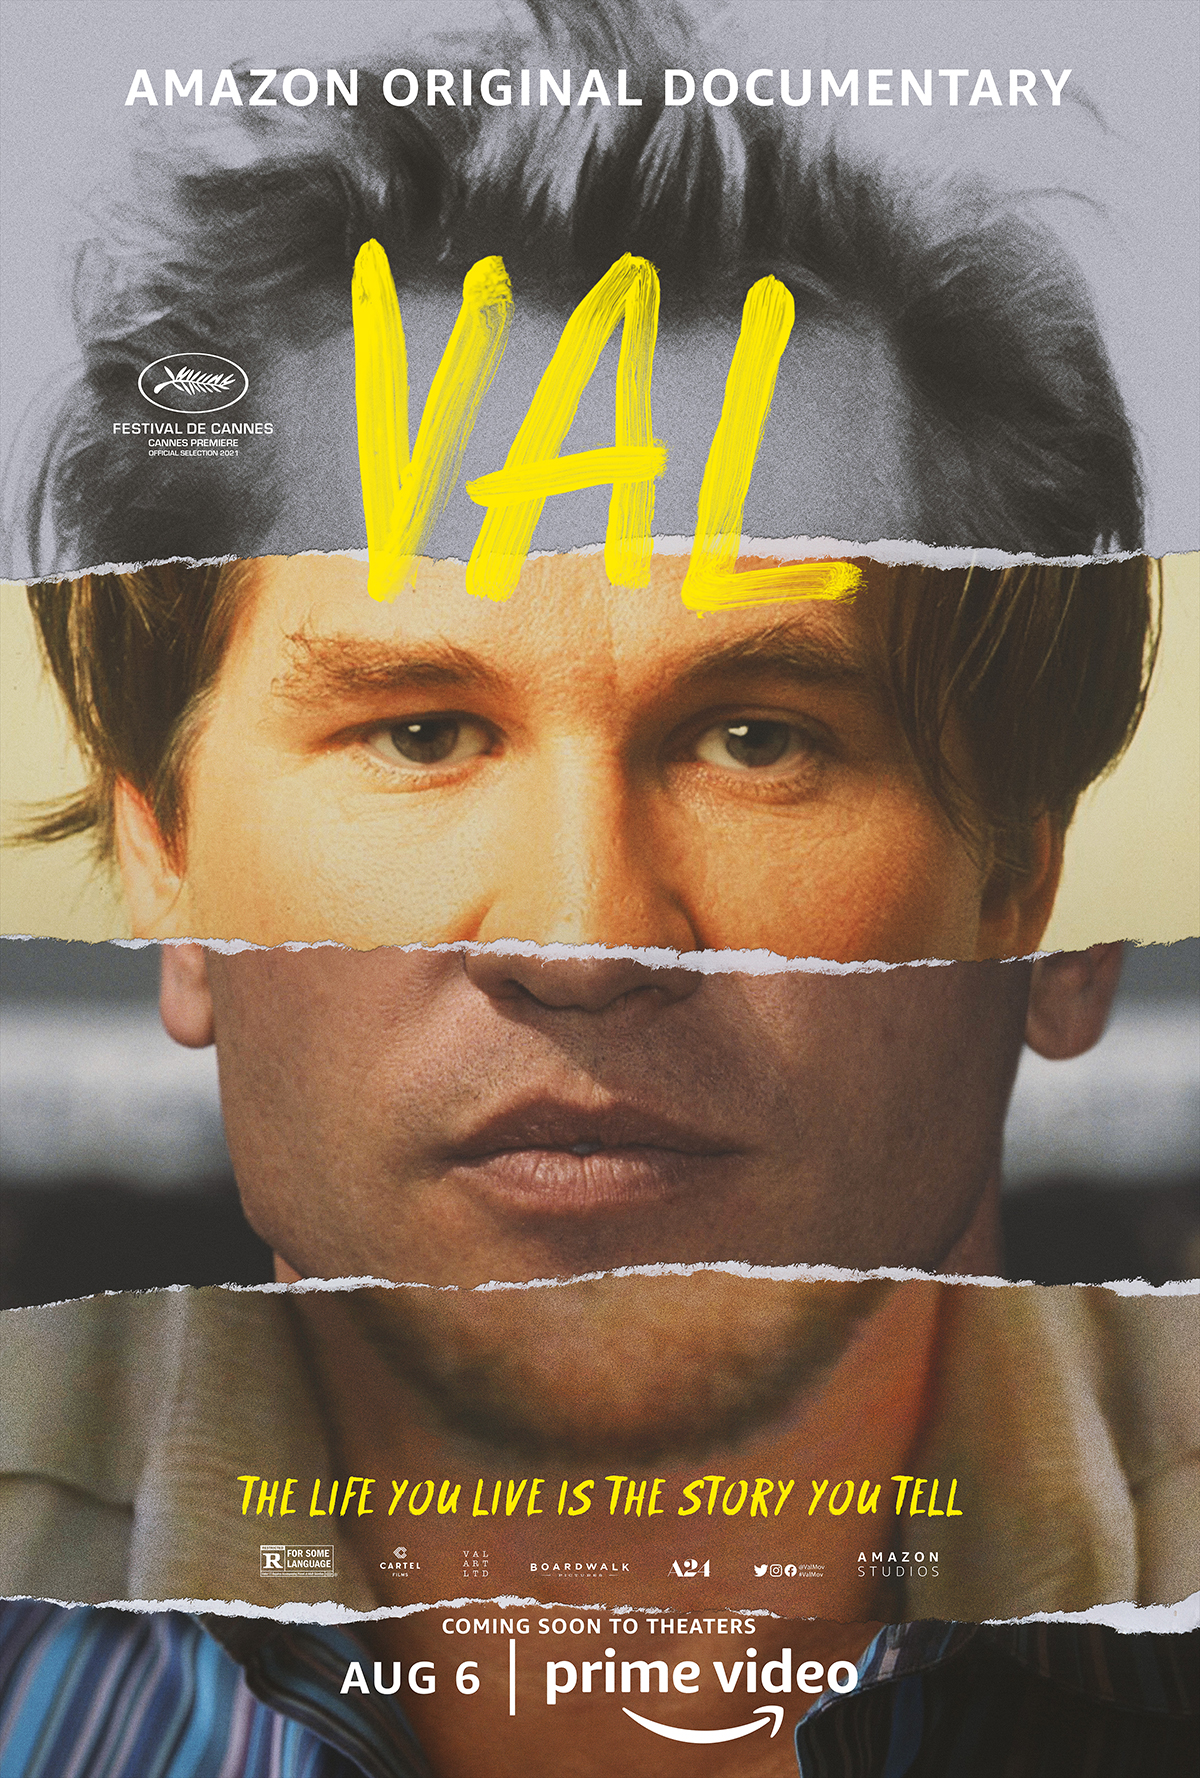 Val Kilmer documentary